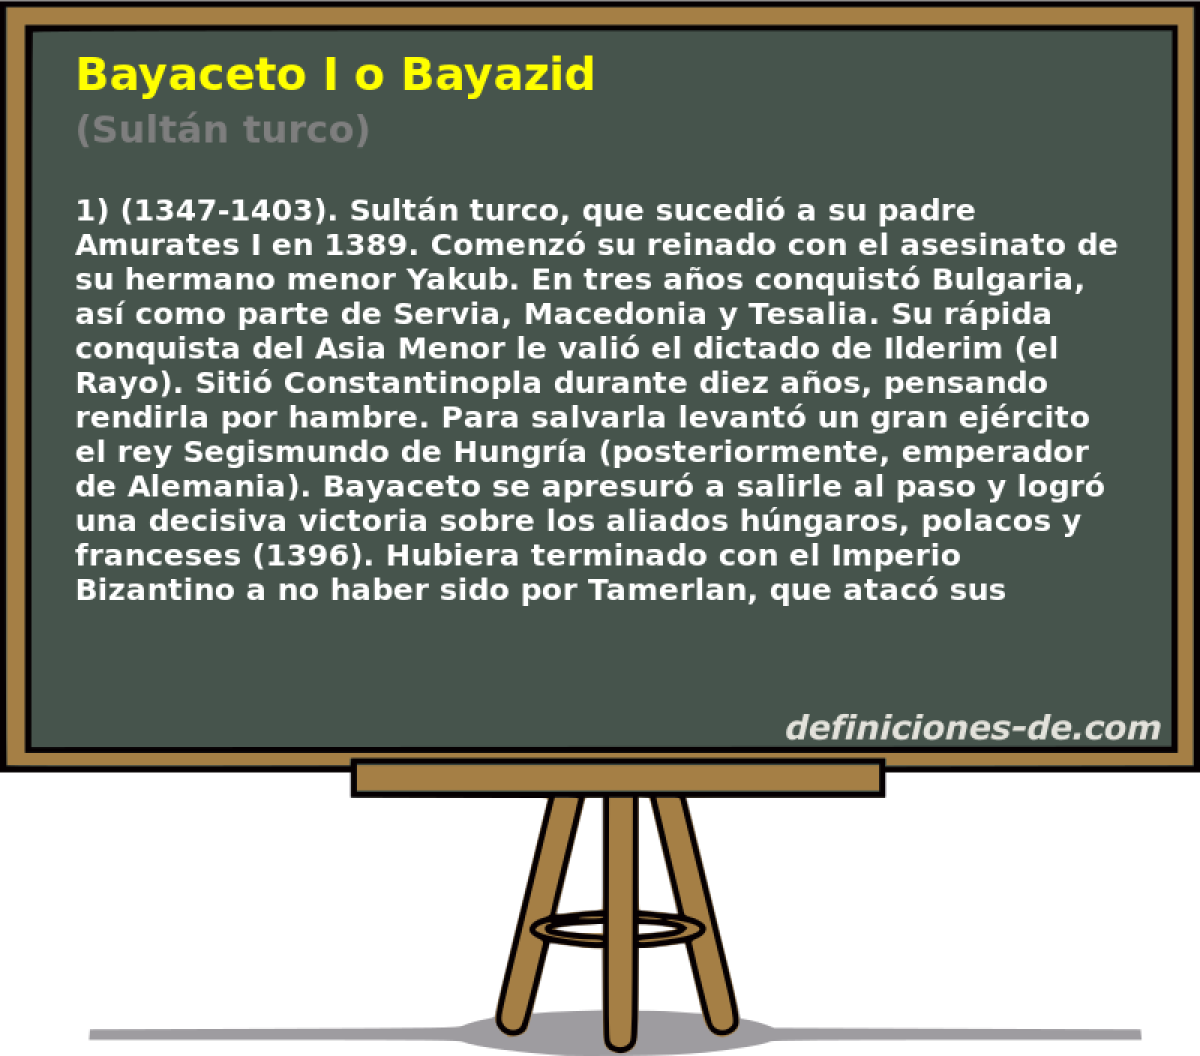 Bayaceto I o Bayazid (Sultn turco)